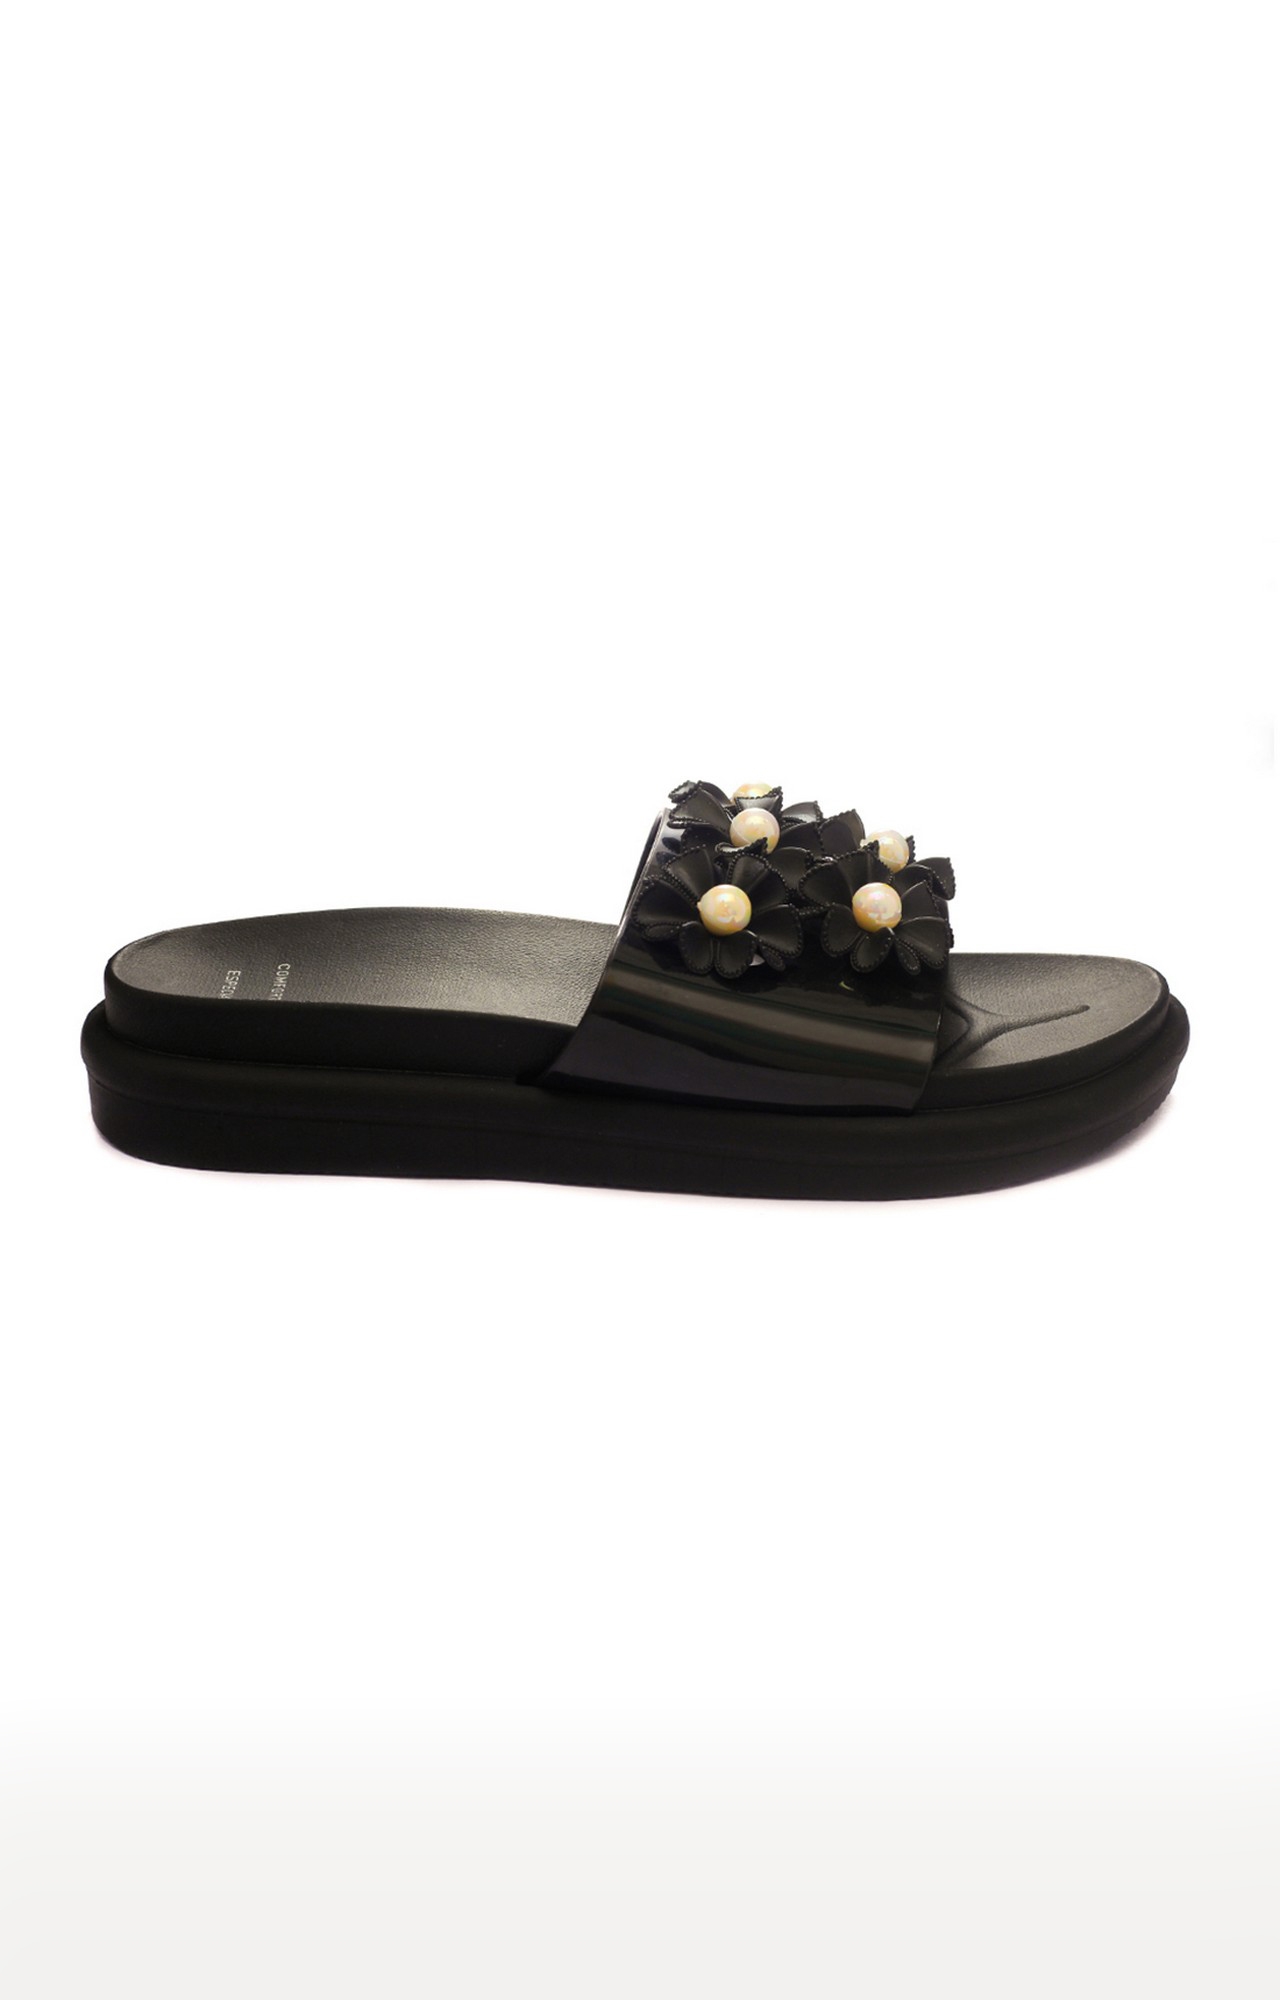 Trends & Trades | Black Flip Flops Sandal For Women 1